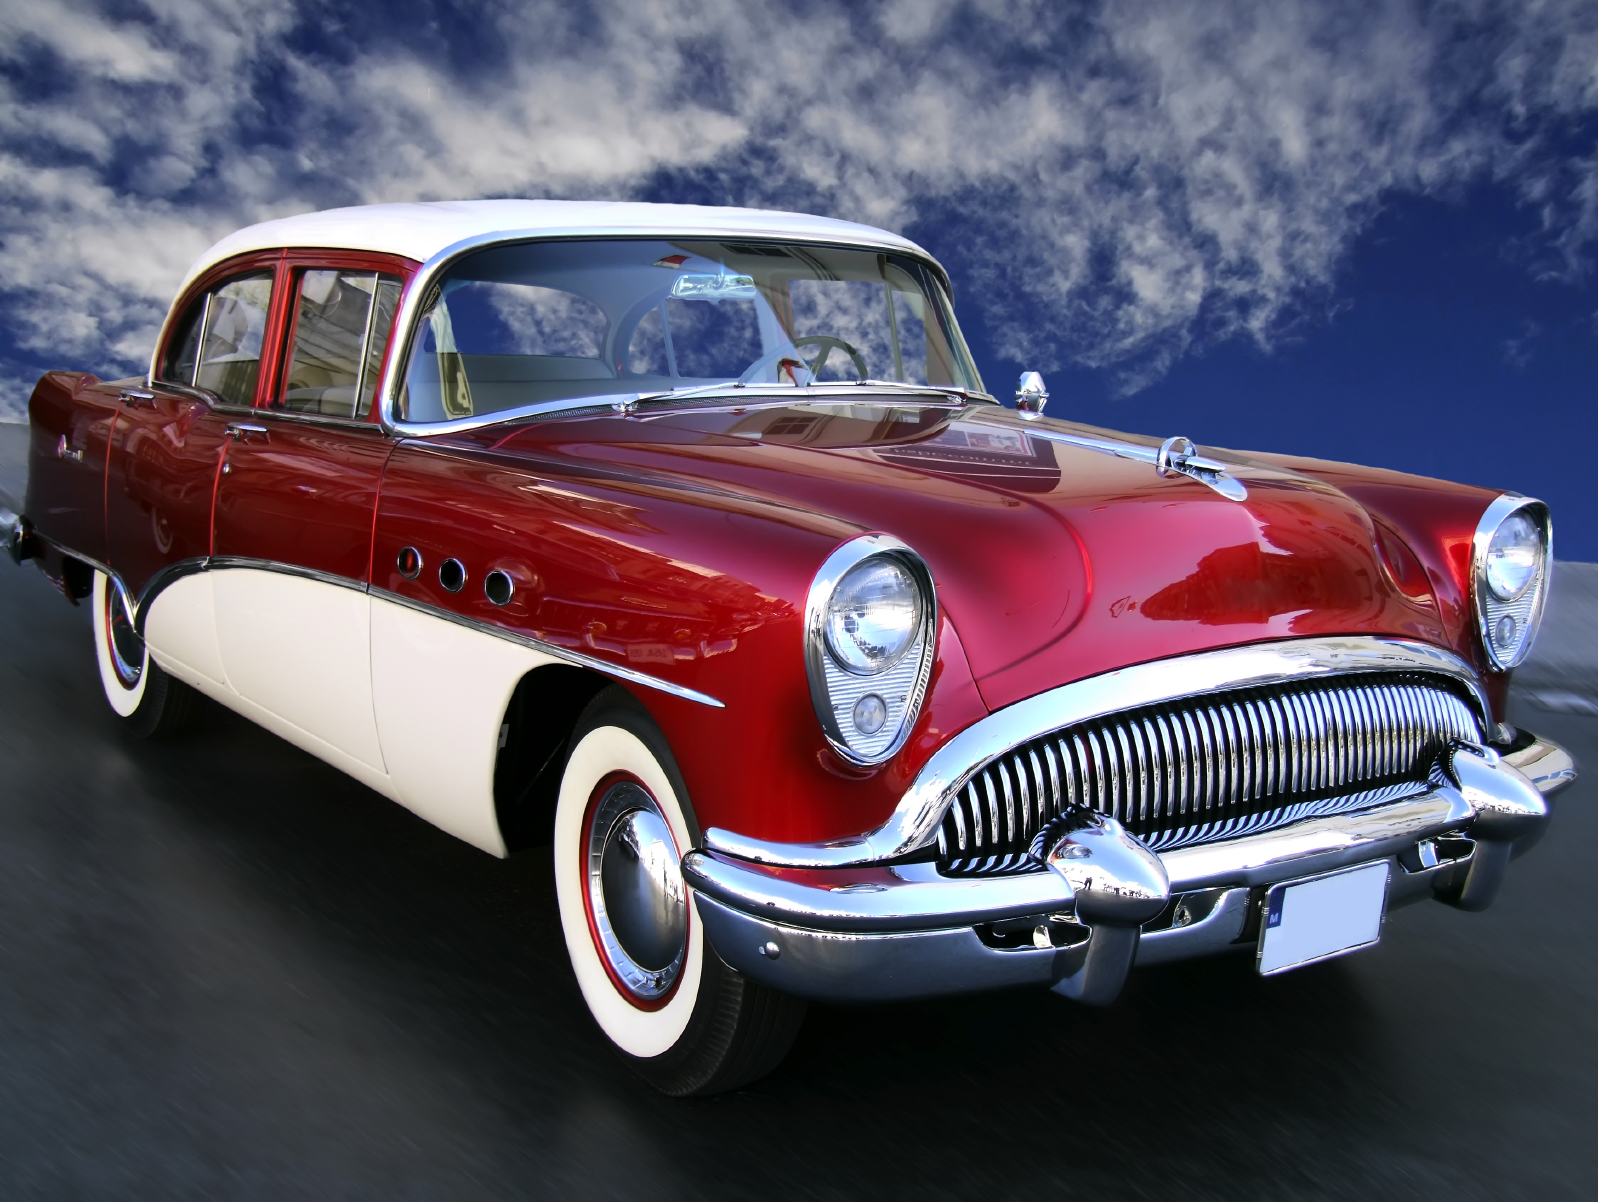 Insuring Your Classic Car - Michael L Davis Insurance